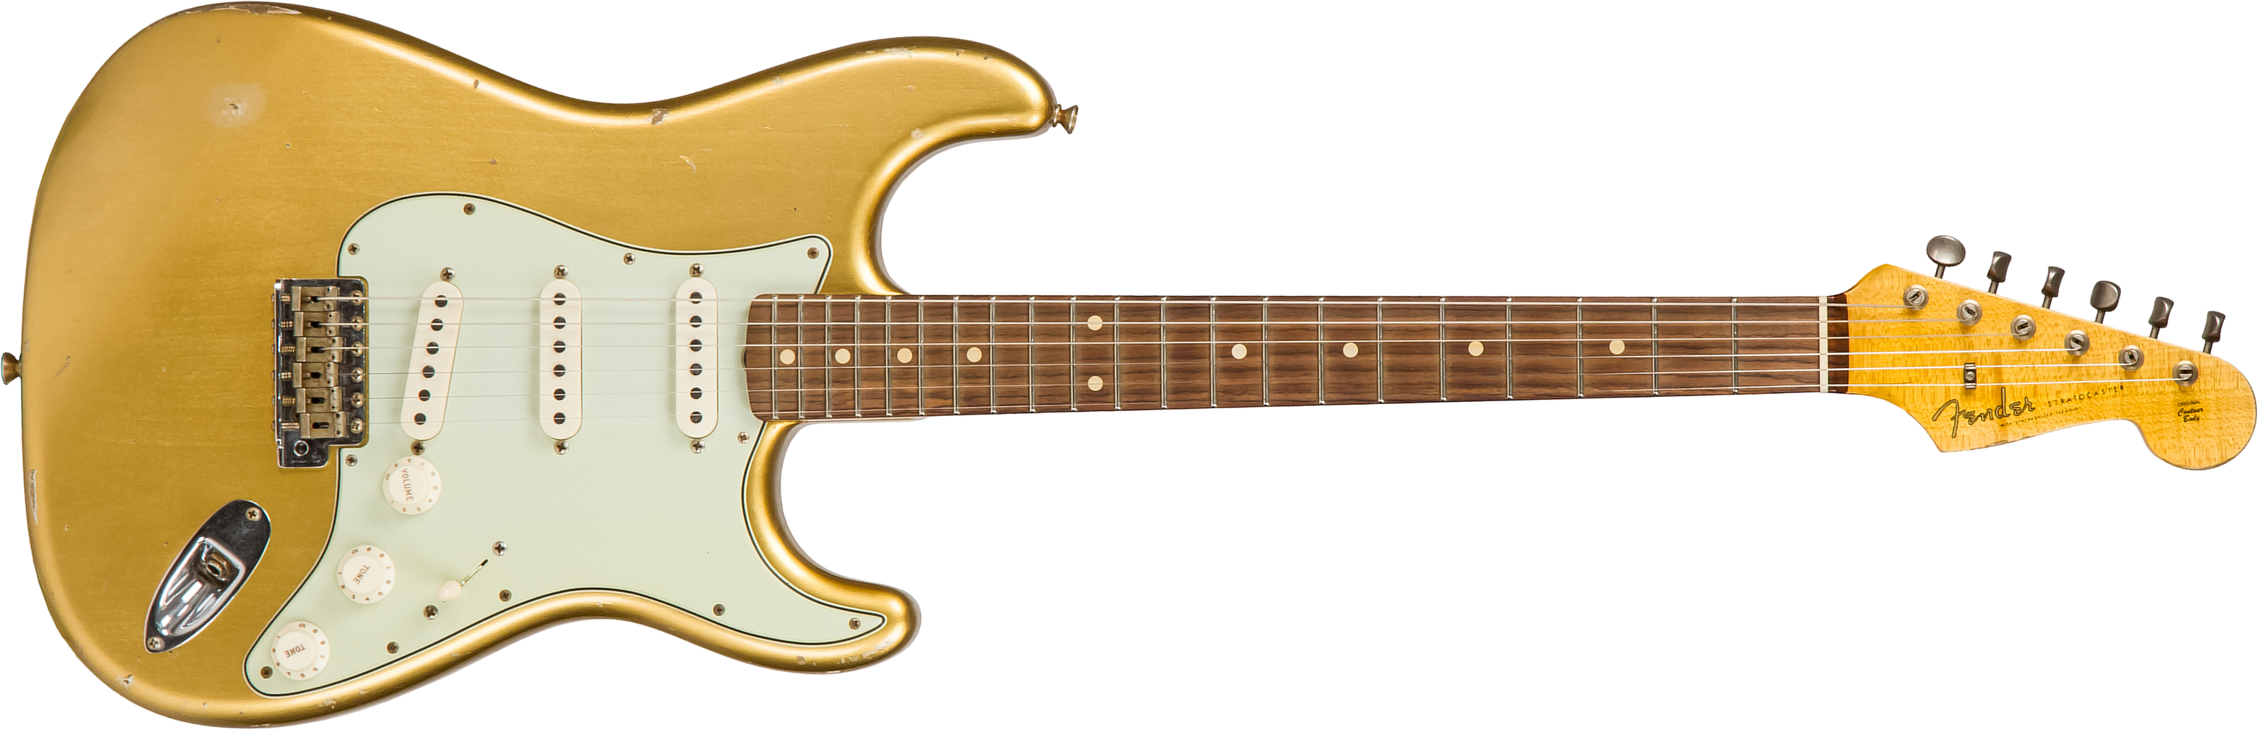 Fender Custom Shop Strat 1960 Rw #cz544406 - Relic Aztec Gold - Guitarra eléctrica con forma de str. - Main picture